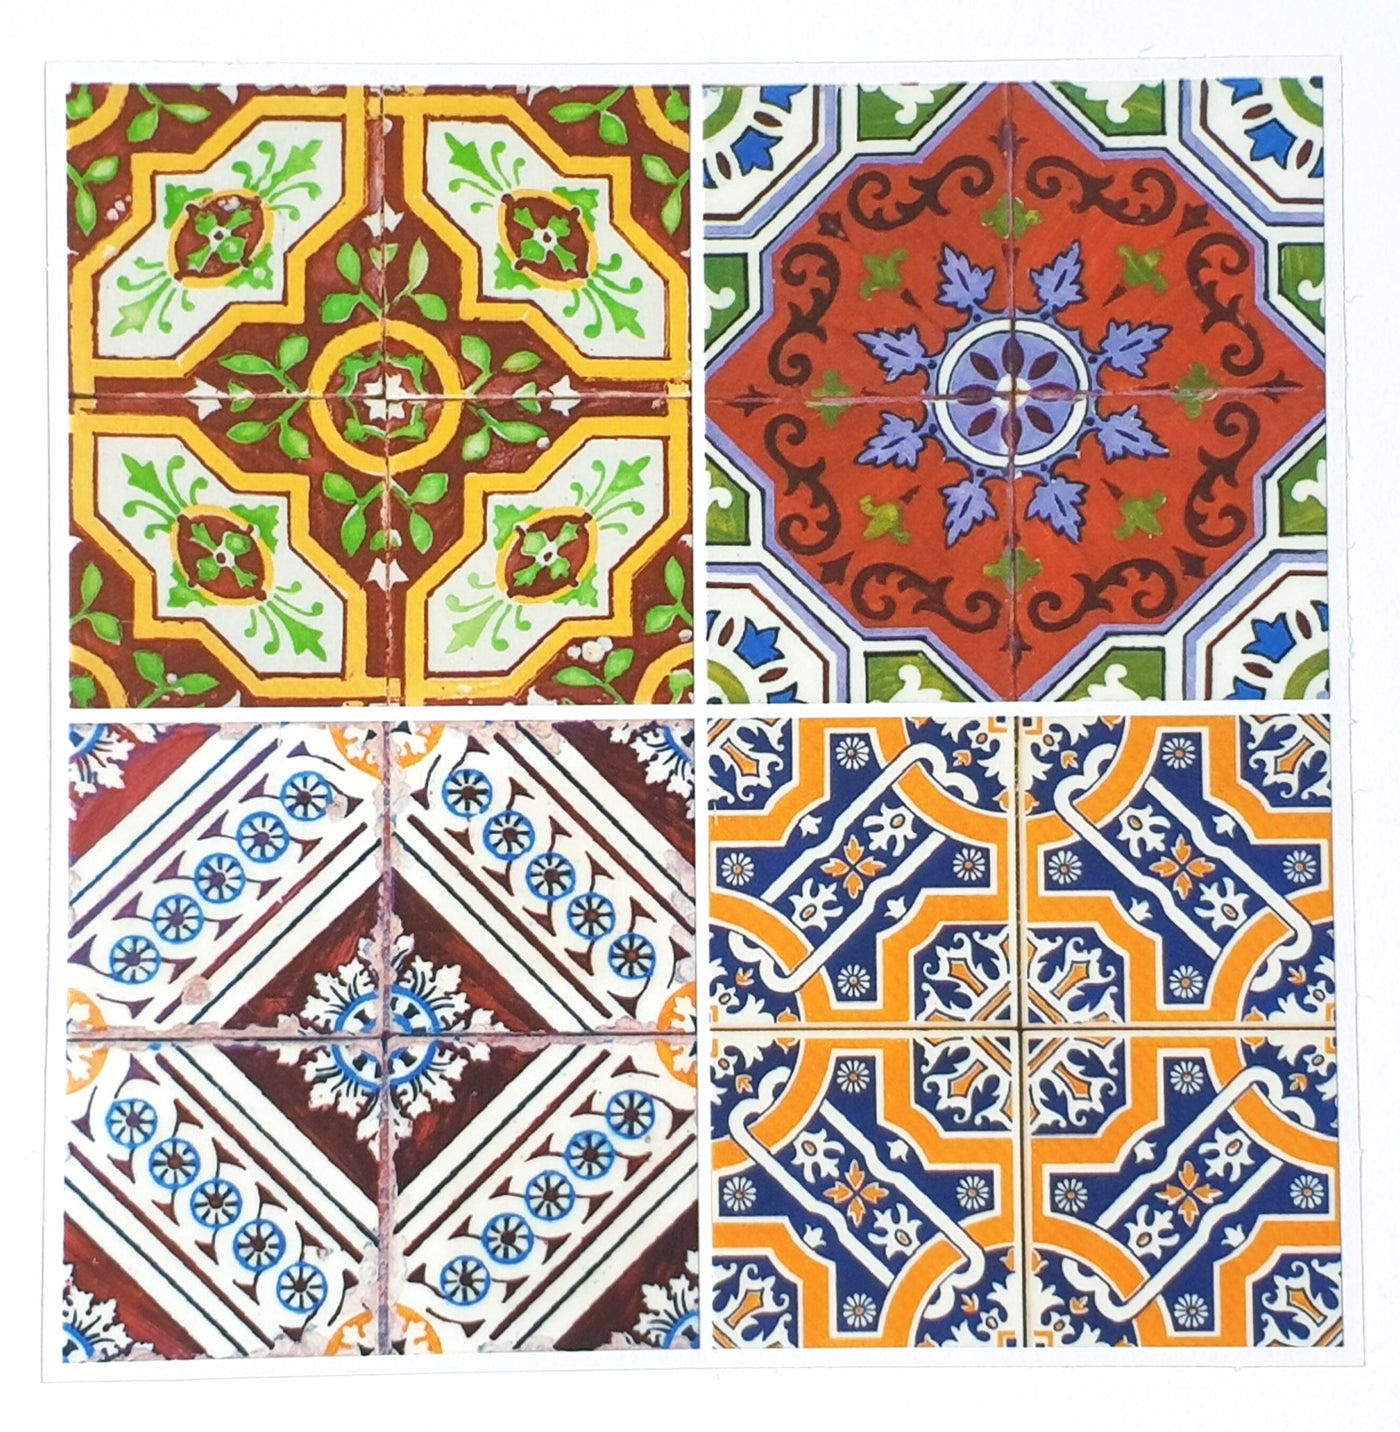 4 Tile Stickers Sheet Portuguese Tiles Scrapbooking Tile Decals Home Deco Sticker Set Envelope Sealer Laptop Stickers, Planner Stickers